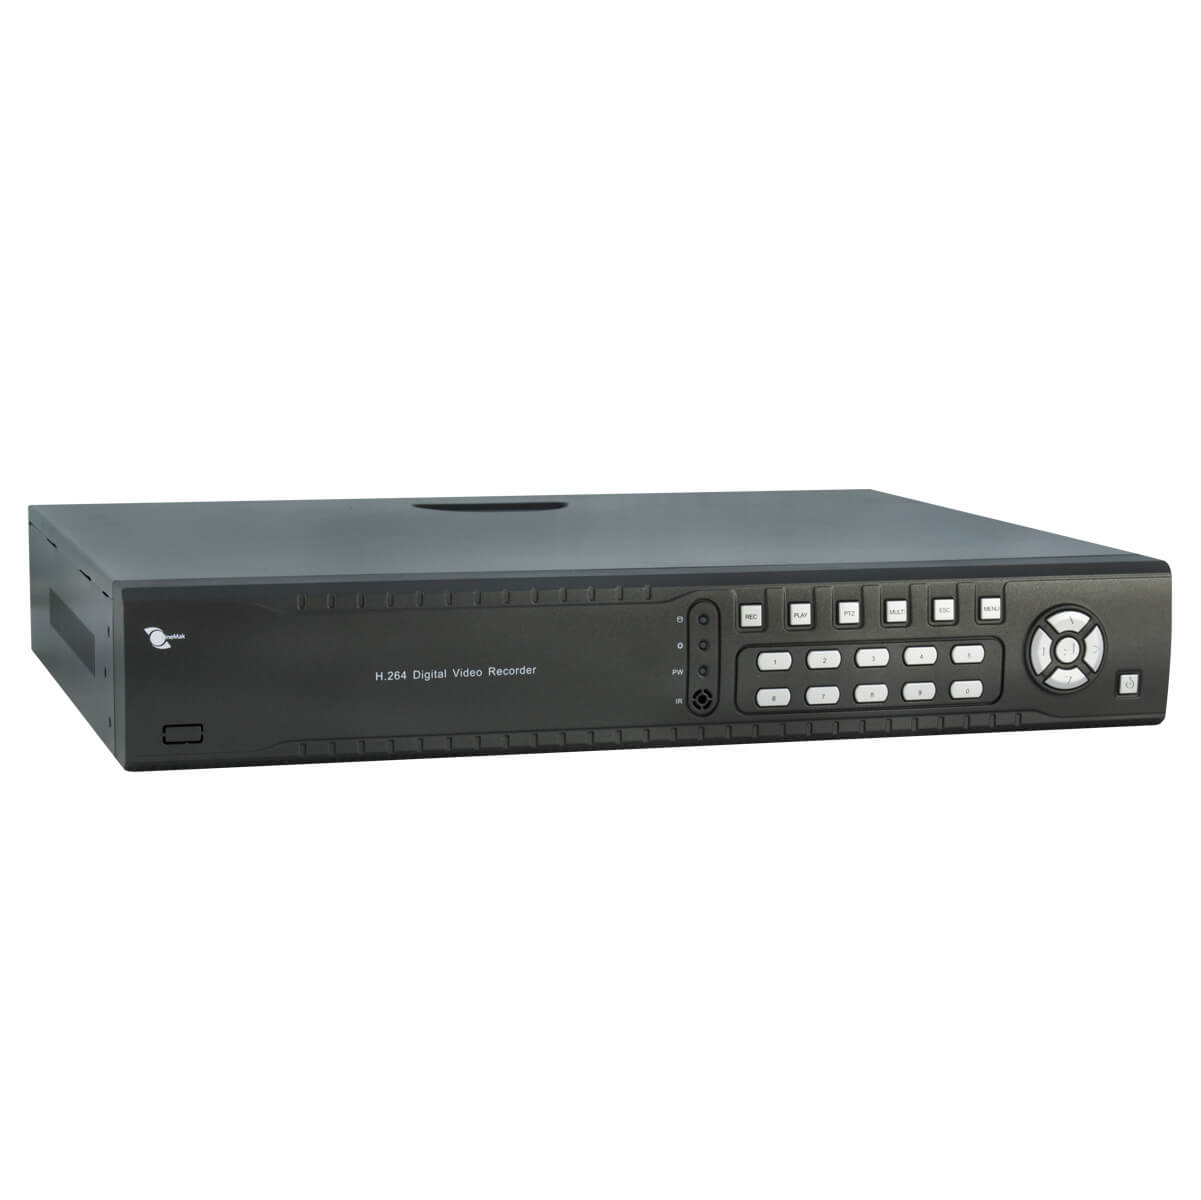 Video grabador en red NVR 16 canales de video/audio, resolucion 1080p, monitoreo por celular